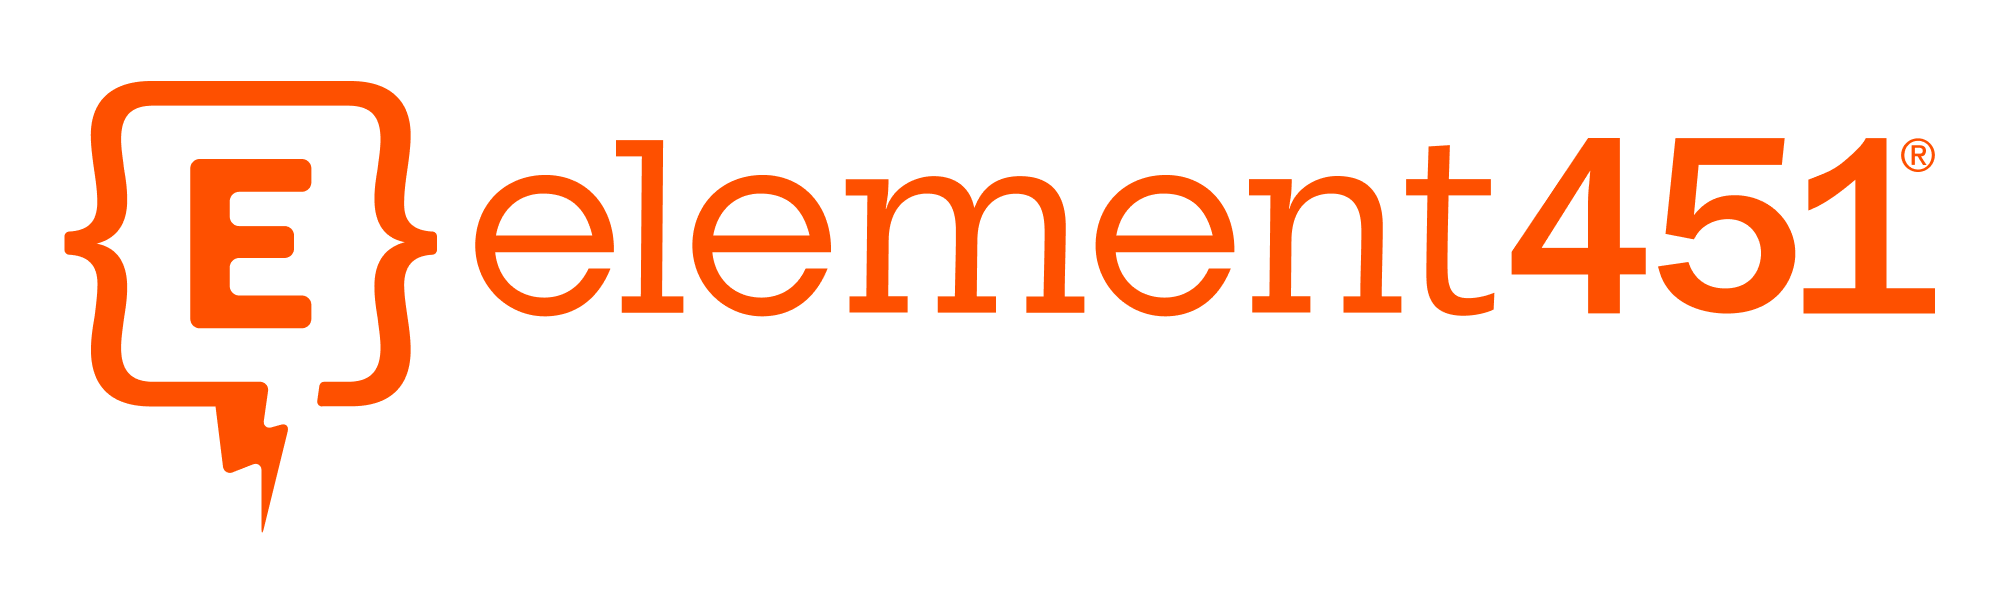 element451 logo